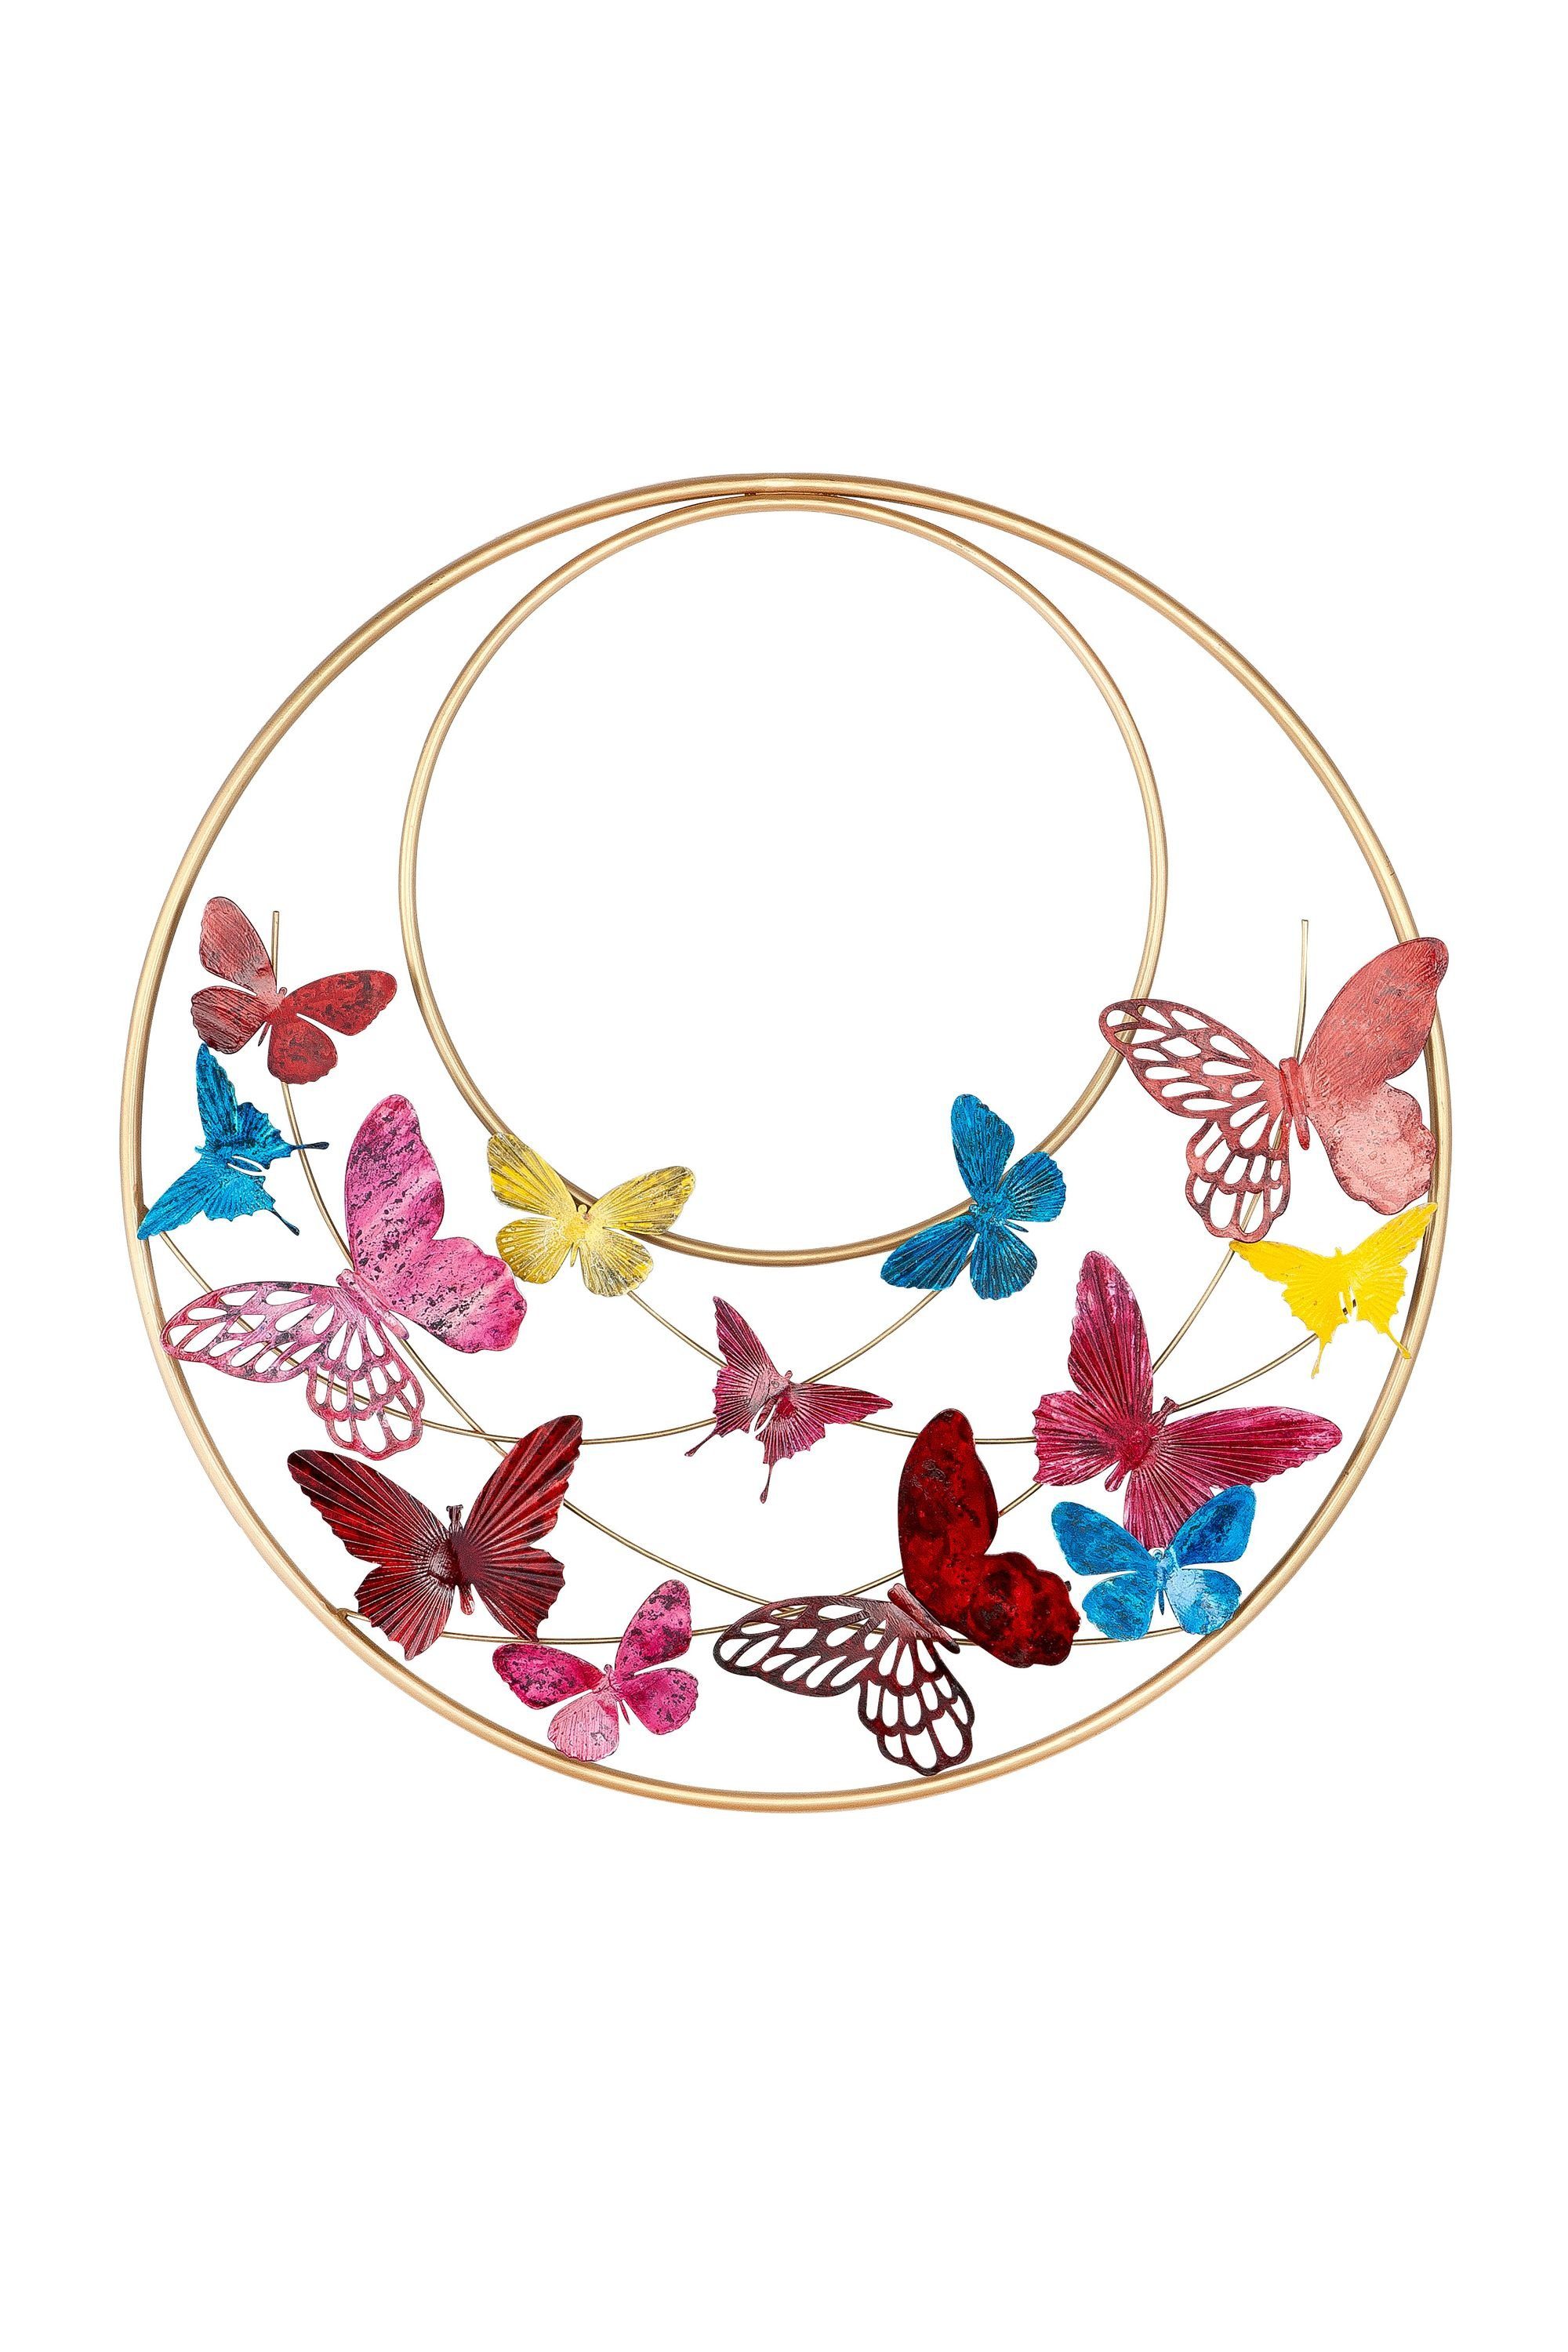 GILDE Bild GILDE Wanddeko Butterflies - mehrfarbig - D. 76cm